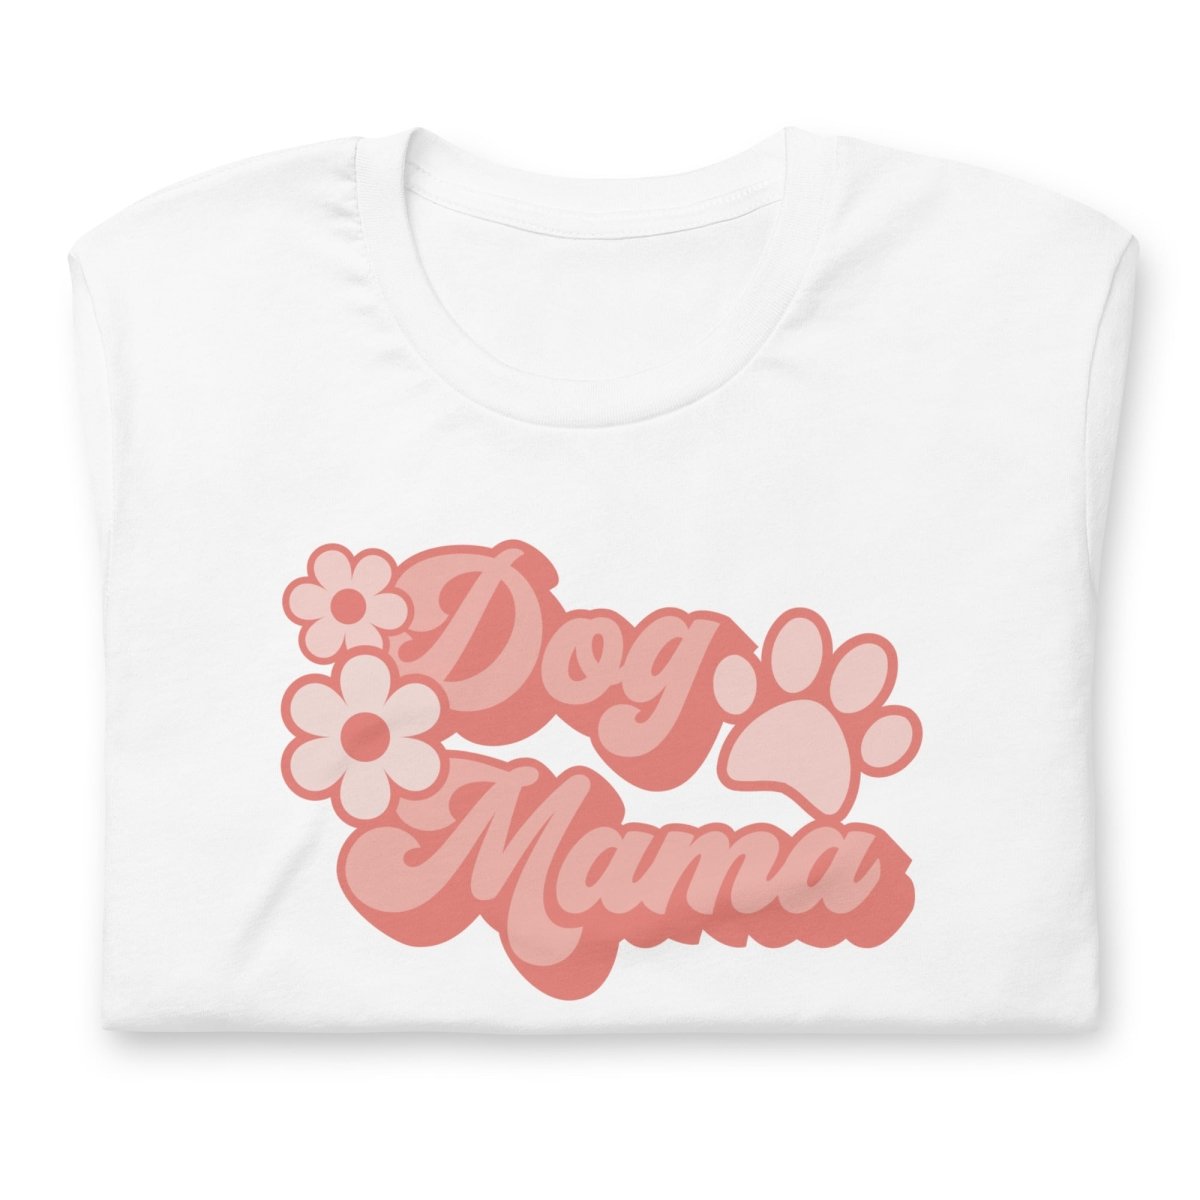 Dog Mama Retro T-Shirt - DoggyLoveandMore